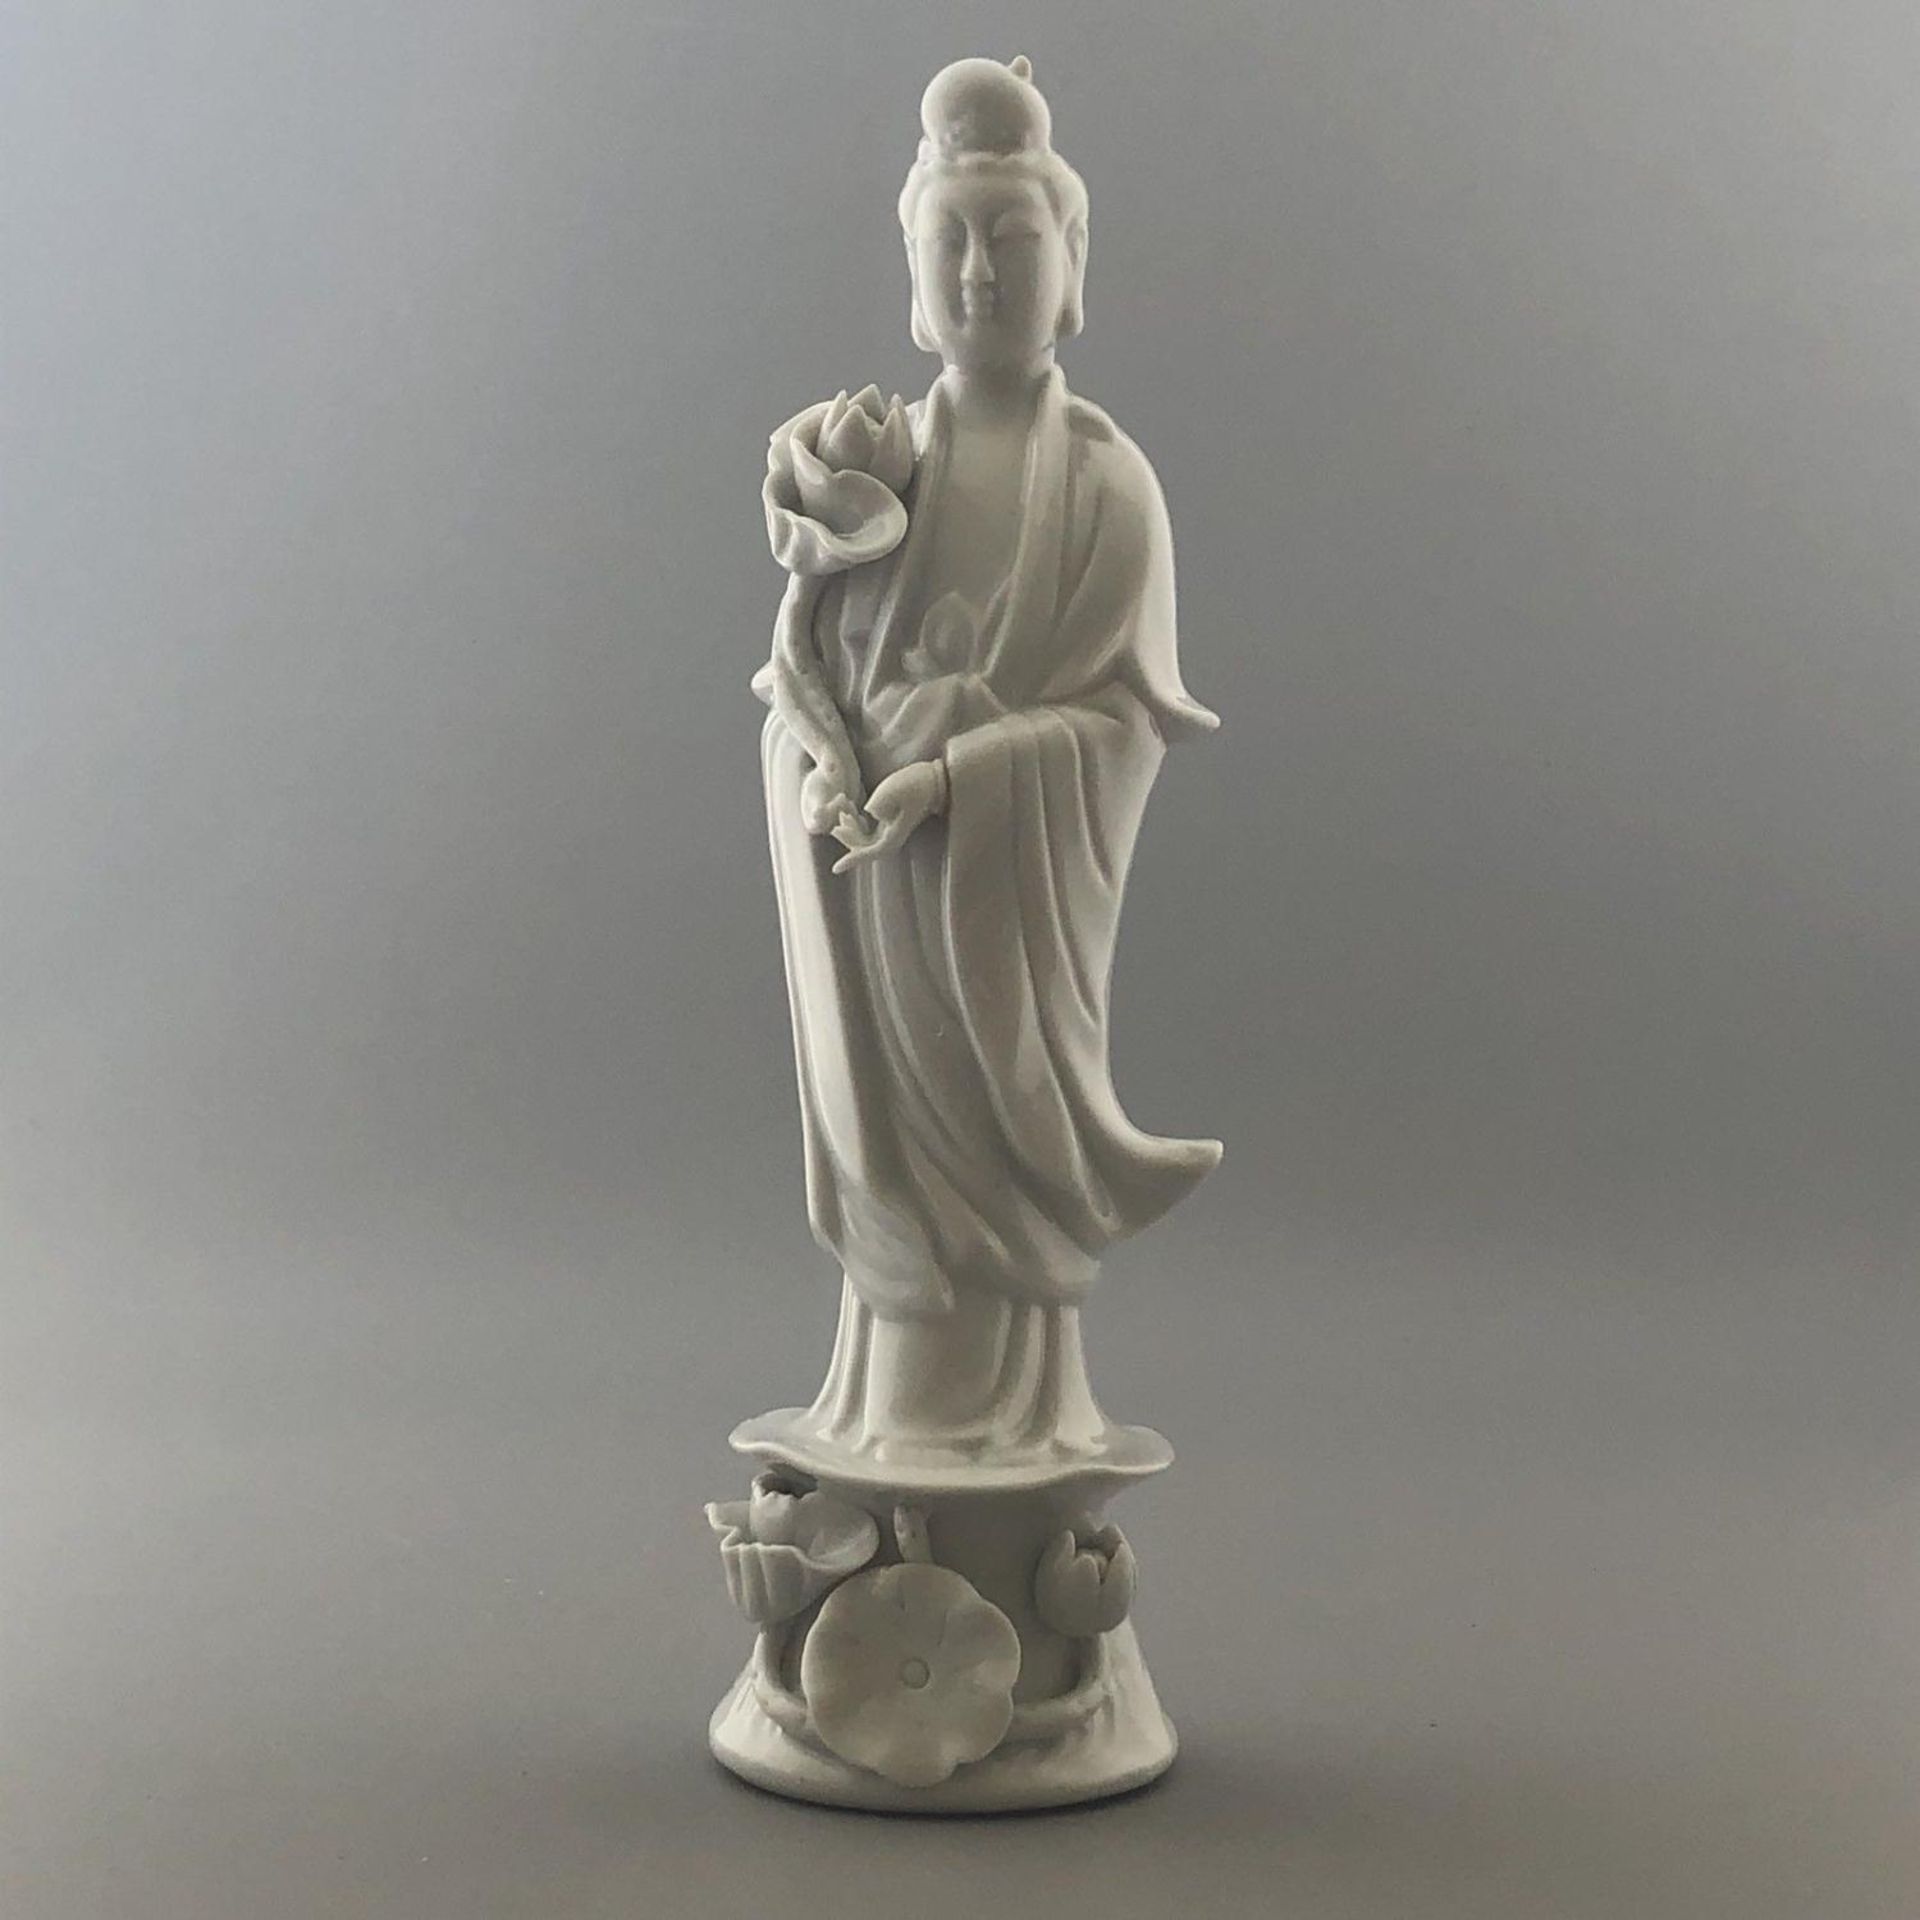 Old Antique Chinese Porcelain Figurine - Blanc de Chine - Guan Yin Lotus Flower - Image 5 of 9